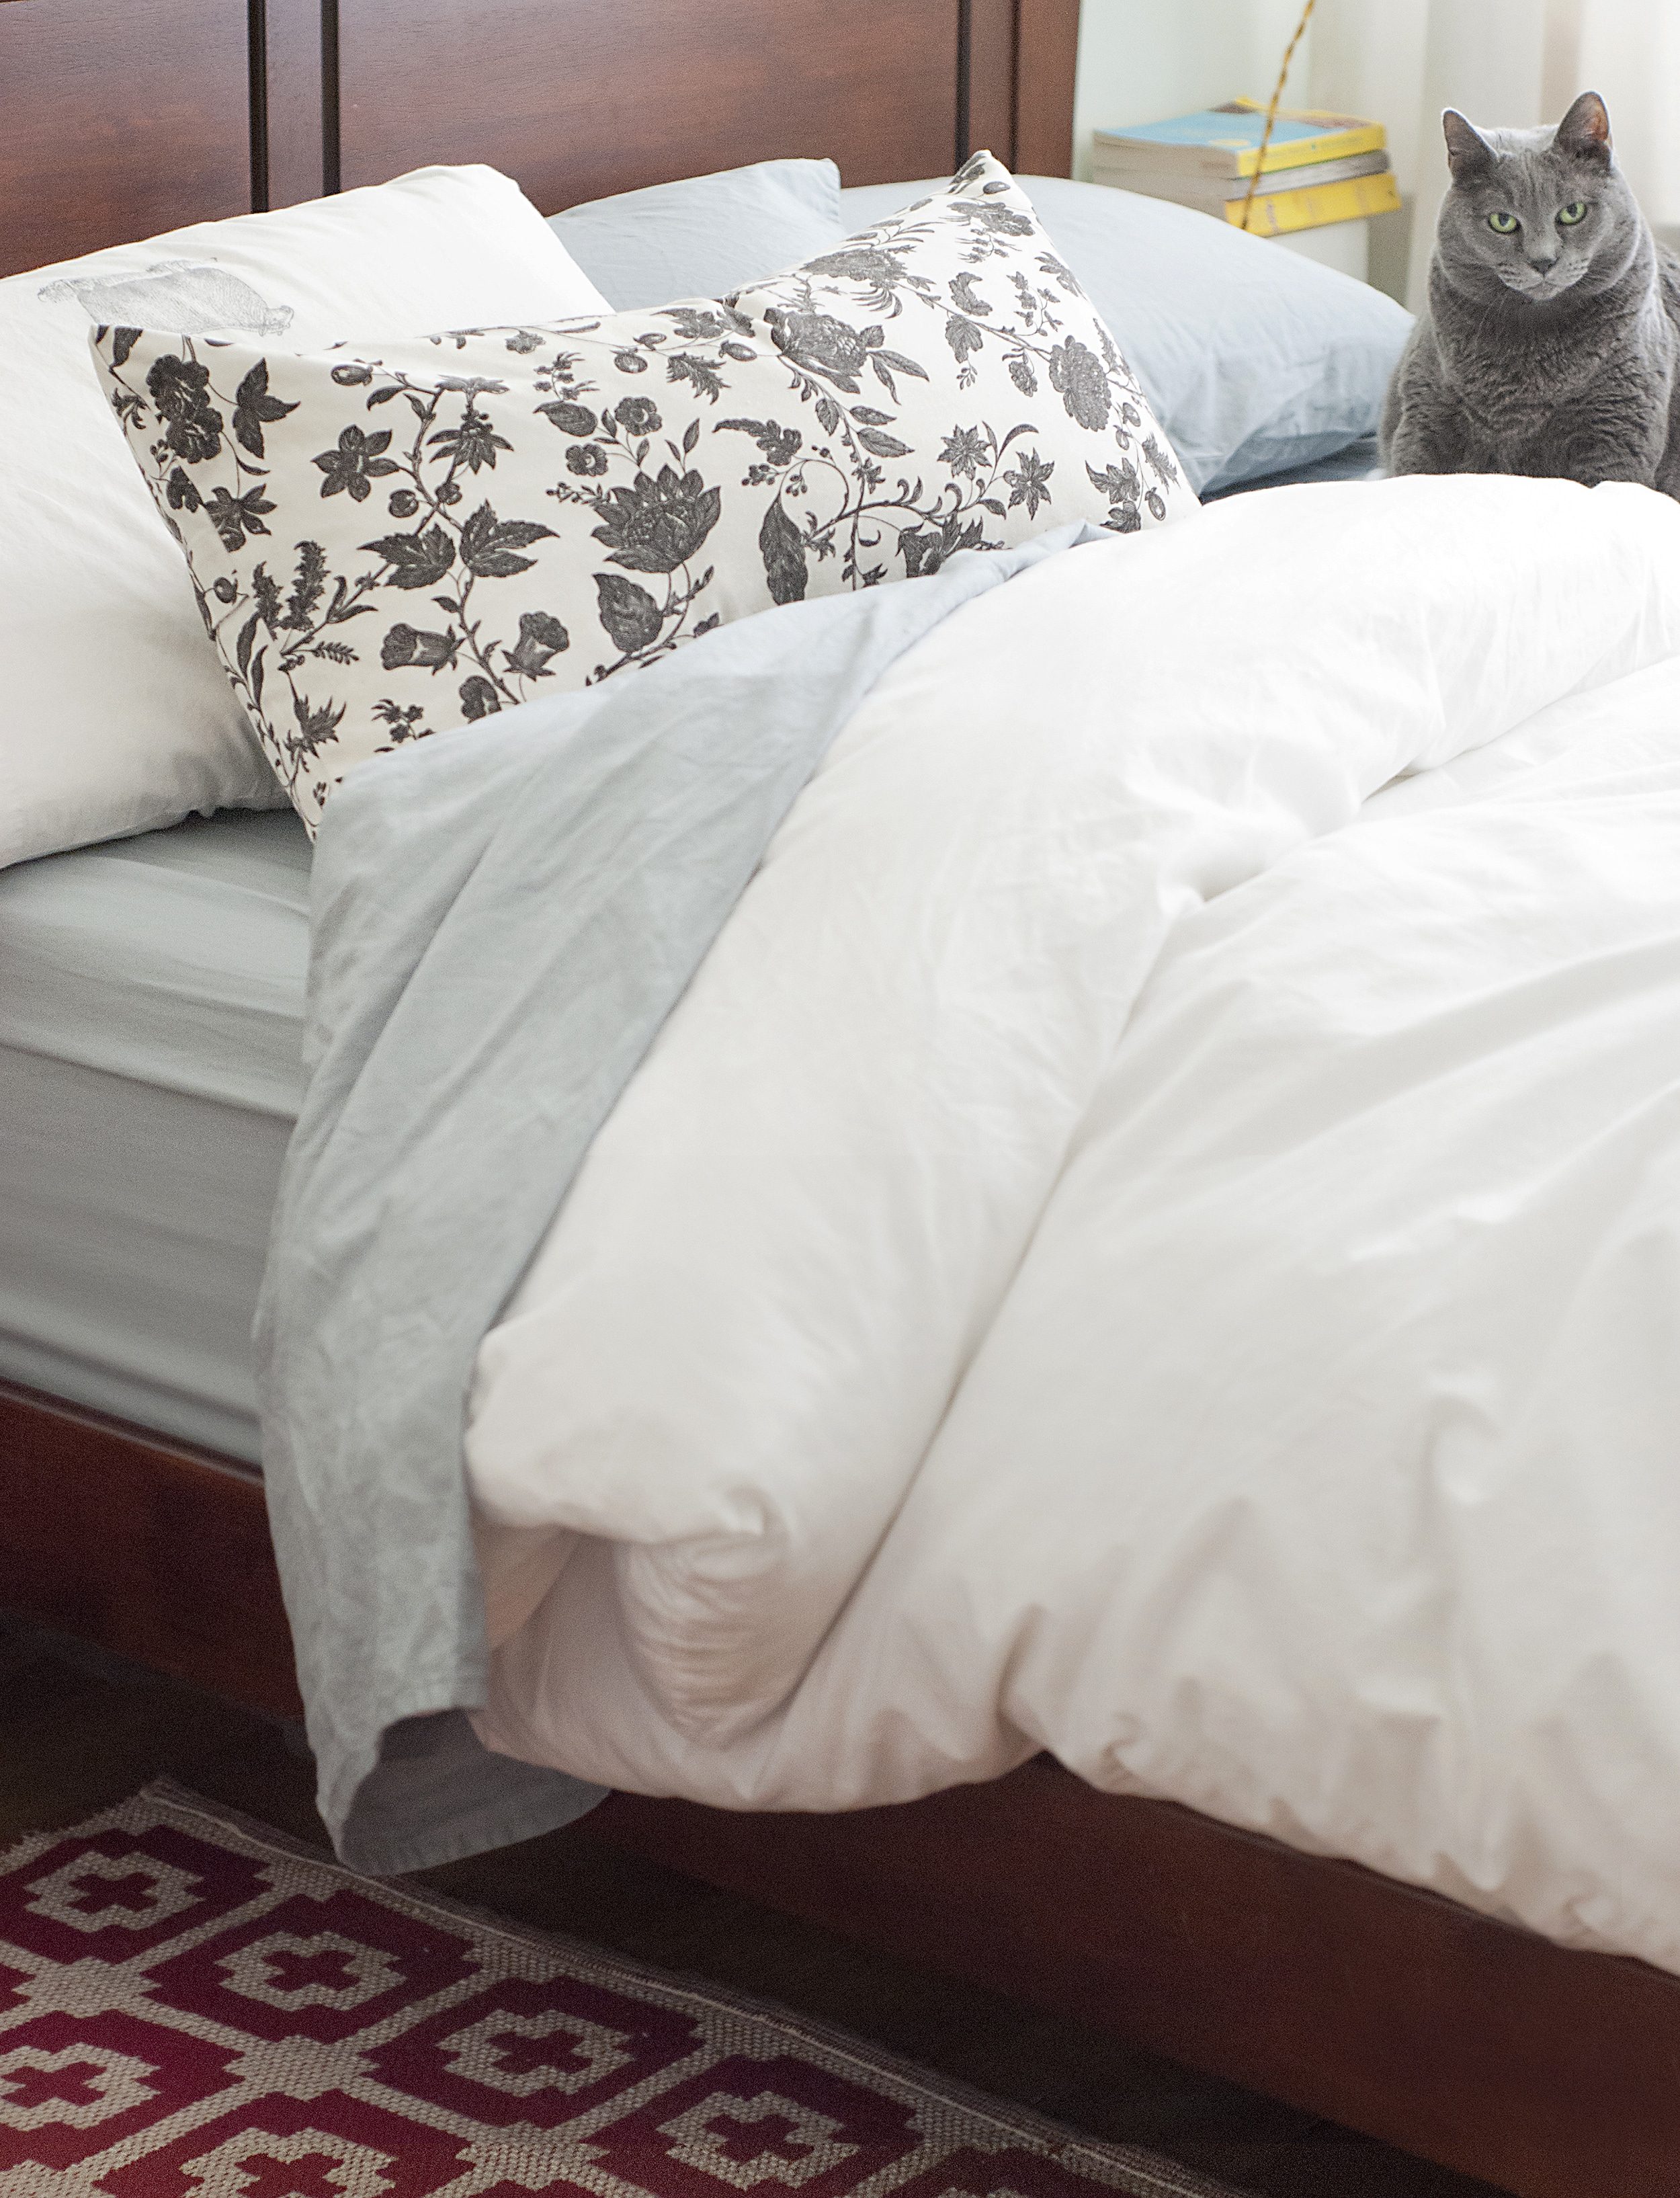 Cozy bedding and Libby! | via Yellow Brick Home